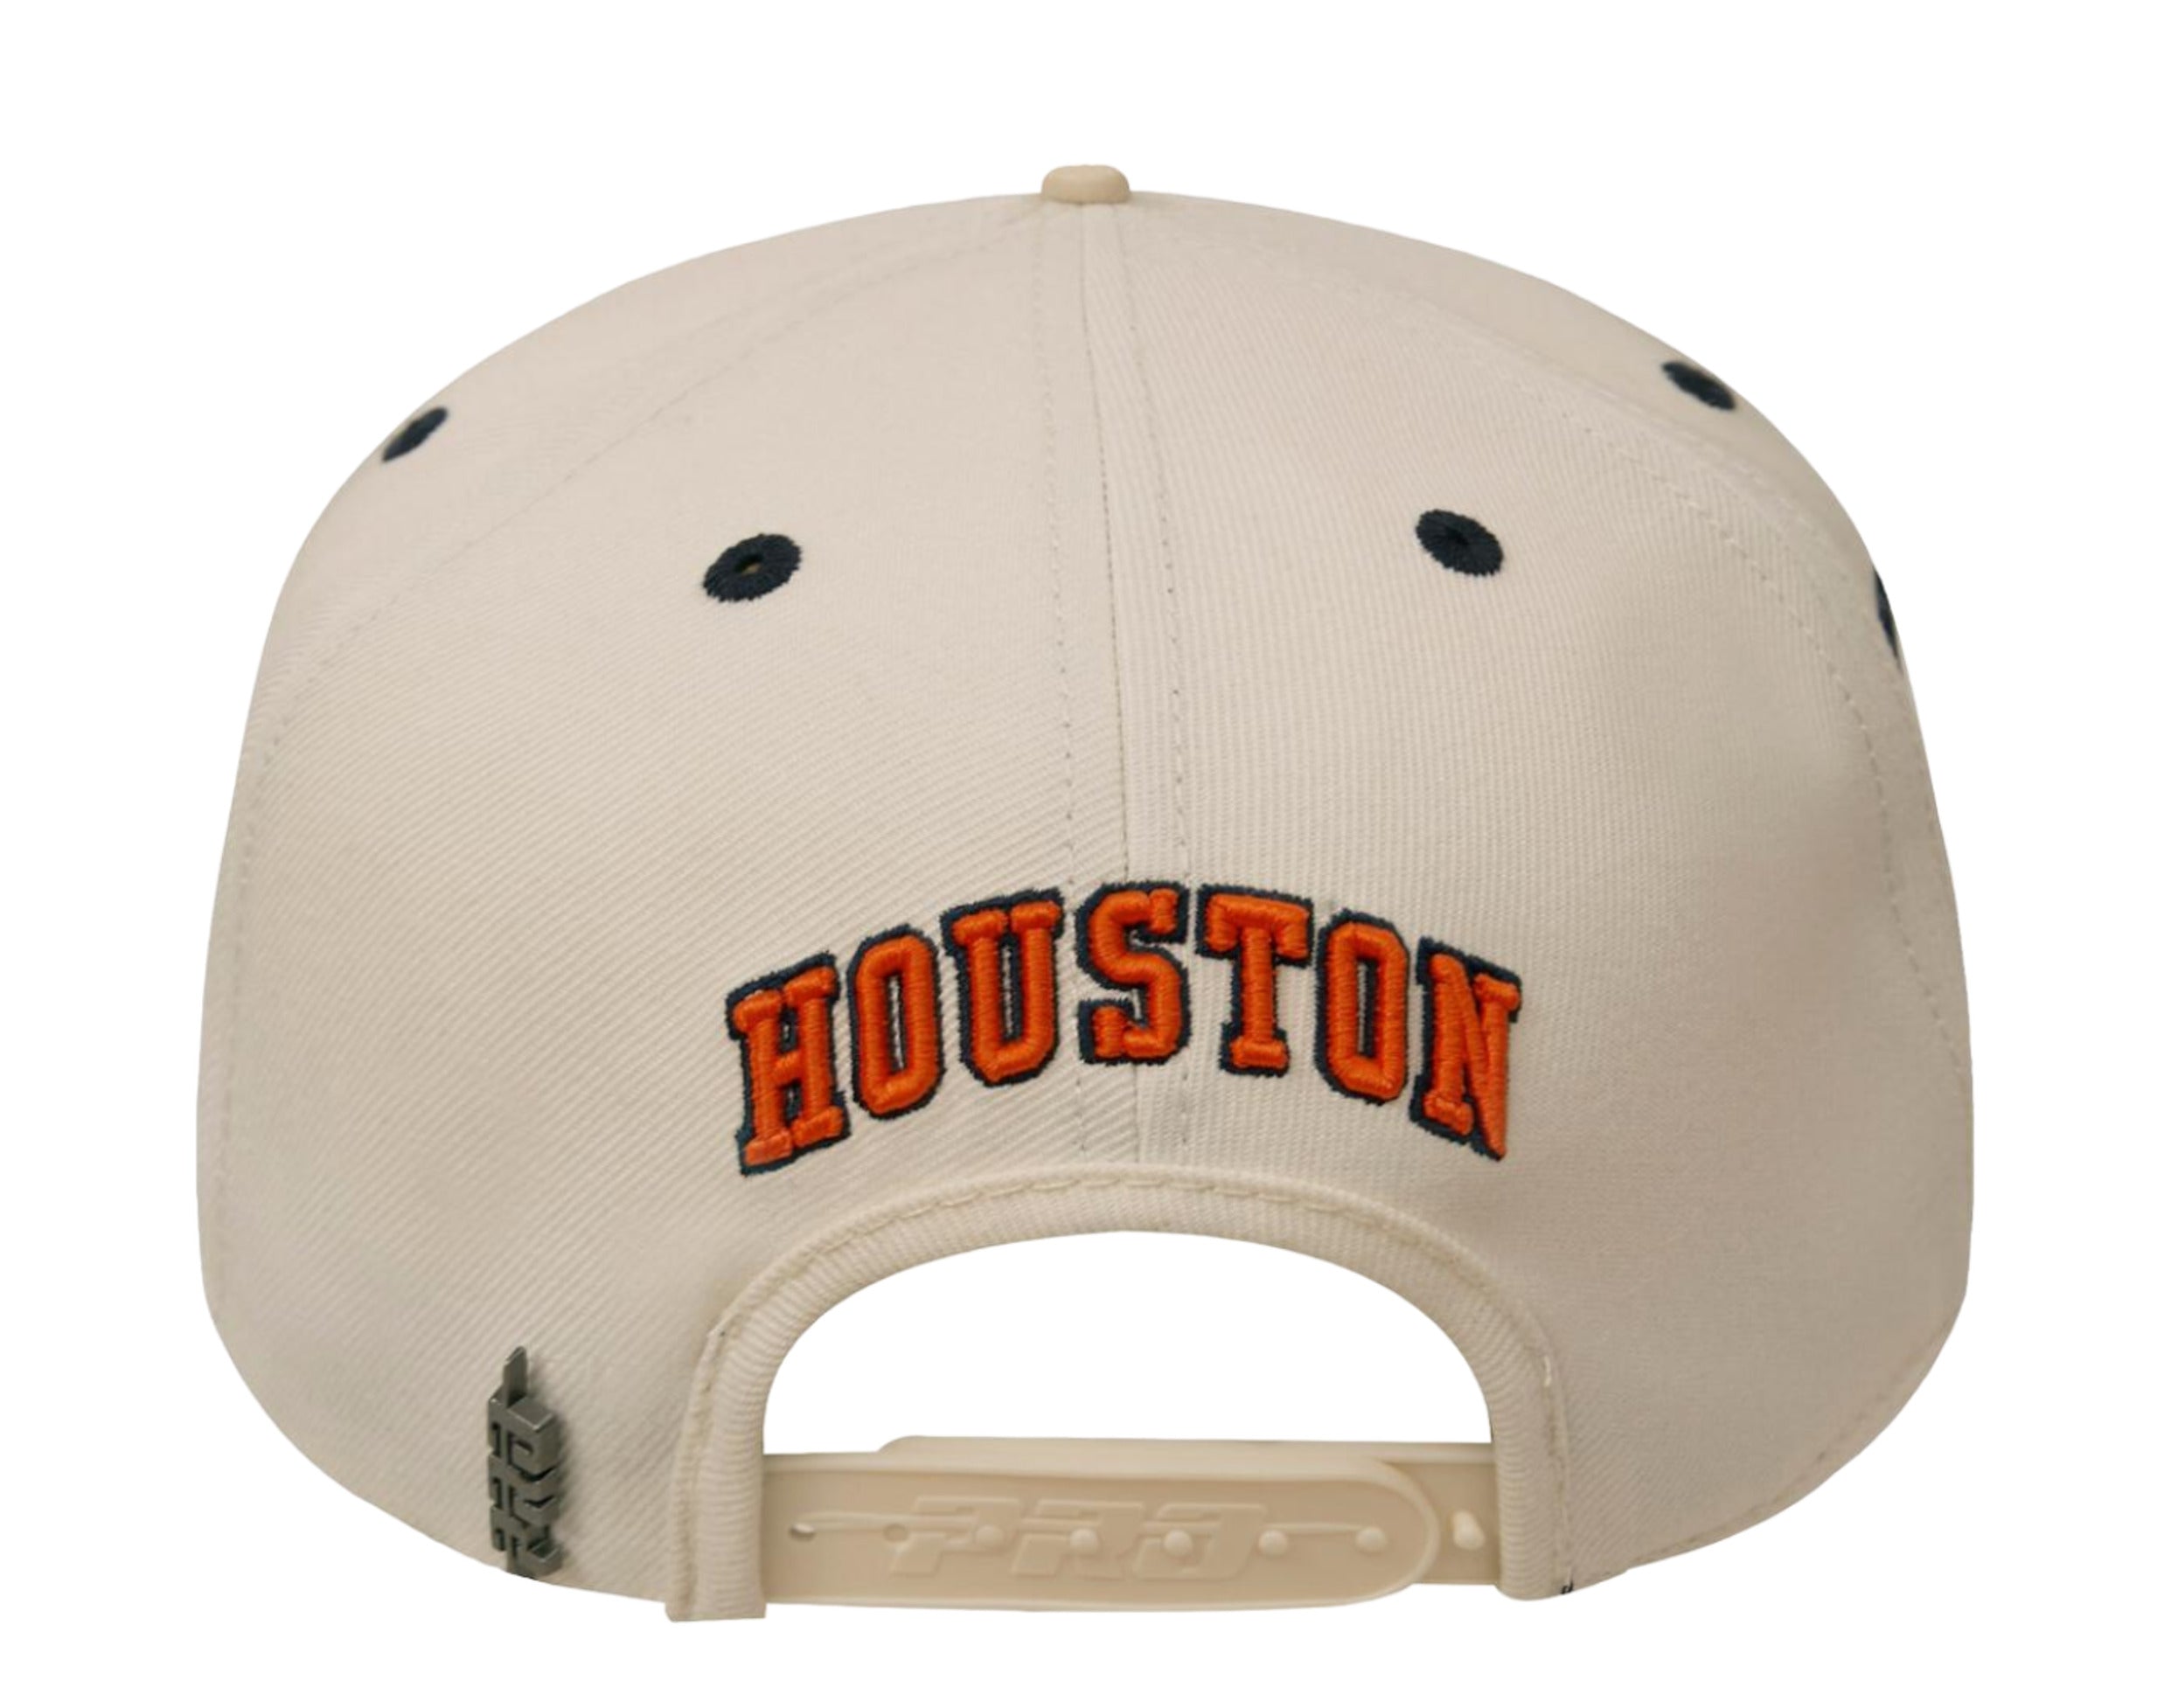 Vintage Baseball - Houston Astros (Orange Astros Wordmark)